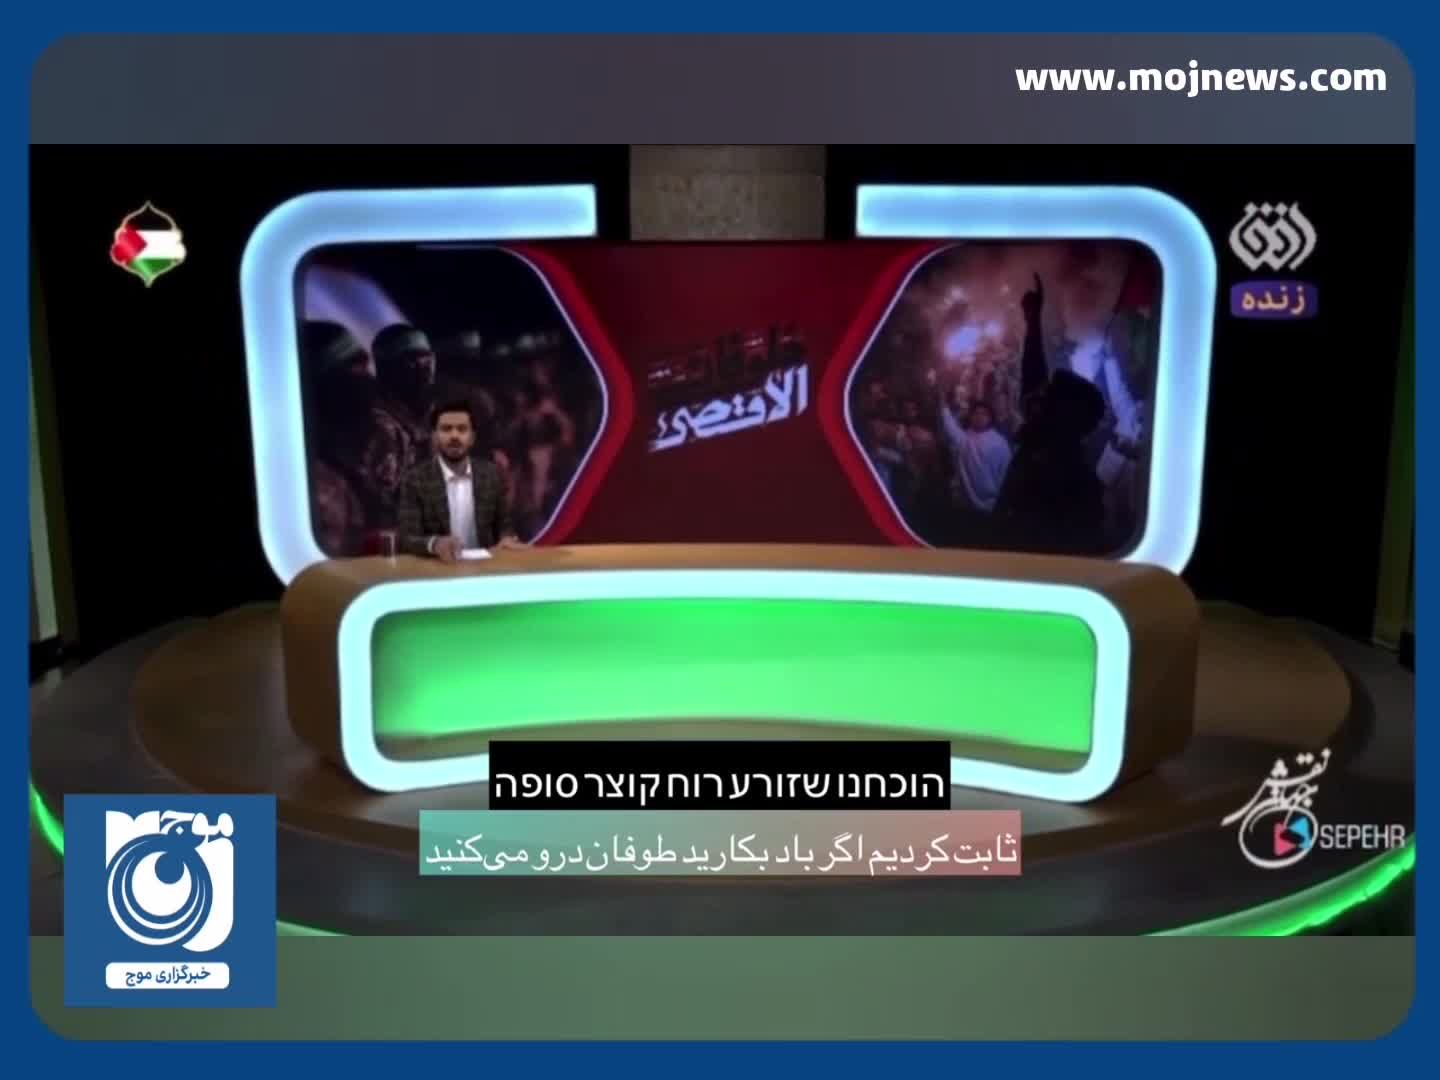  پاسخ عبری مجری صداوسیما به تهدید خبرنگار شبکه ۱۴ اسرائیل! + فیلم